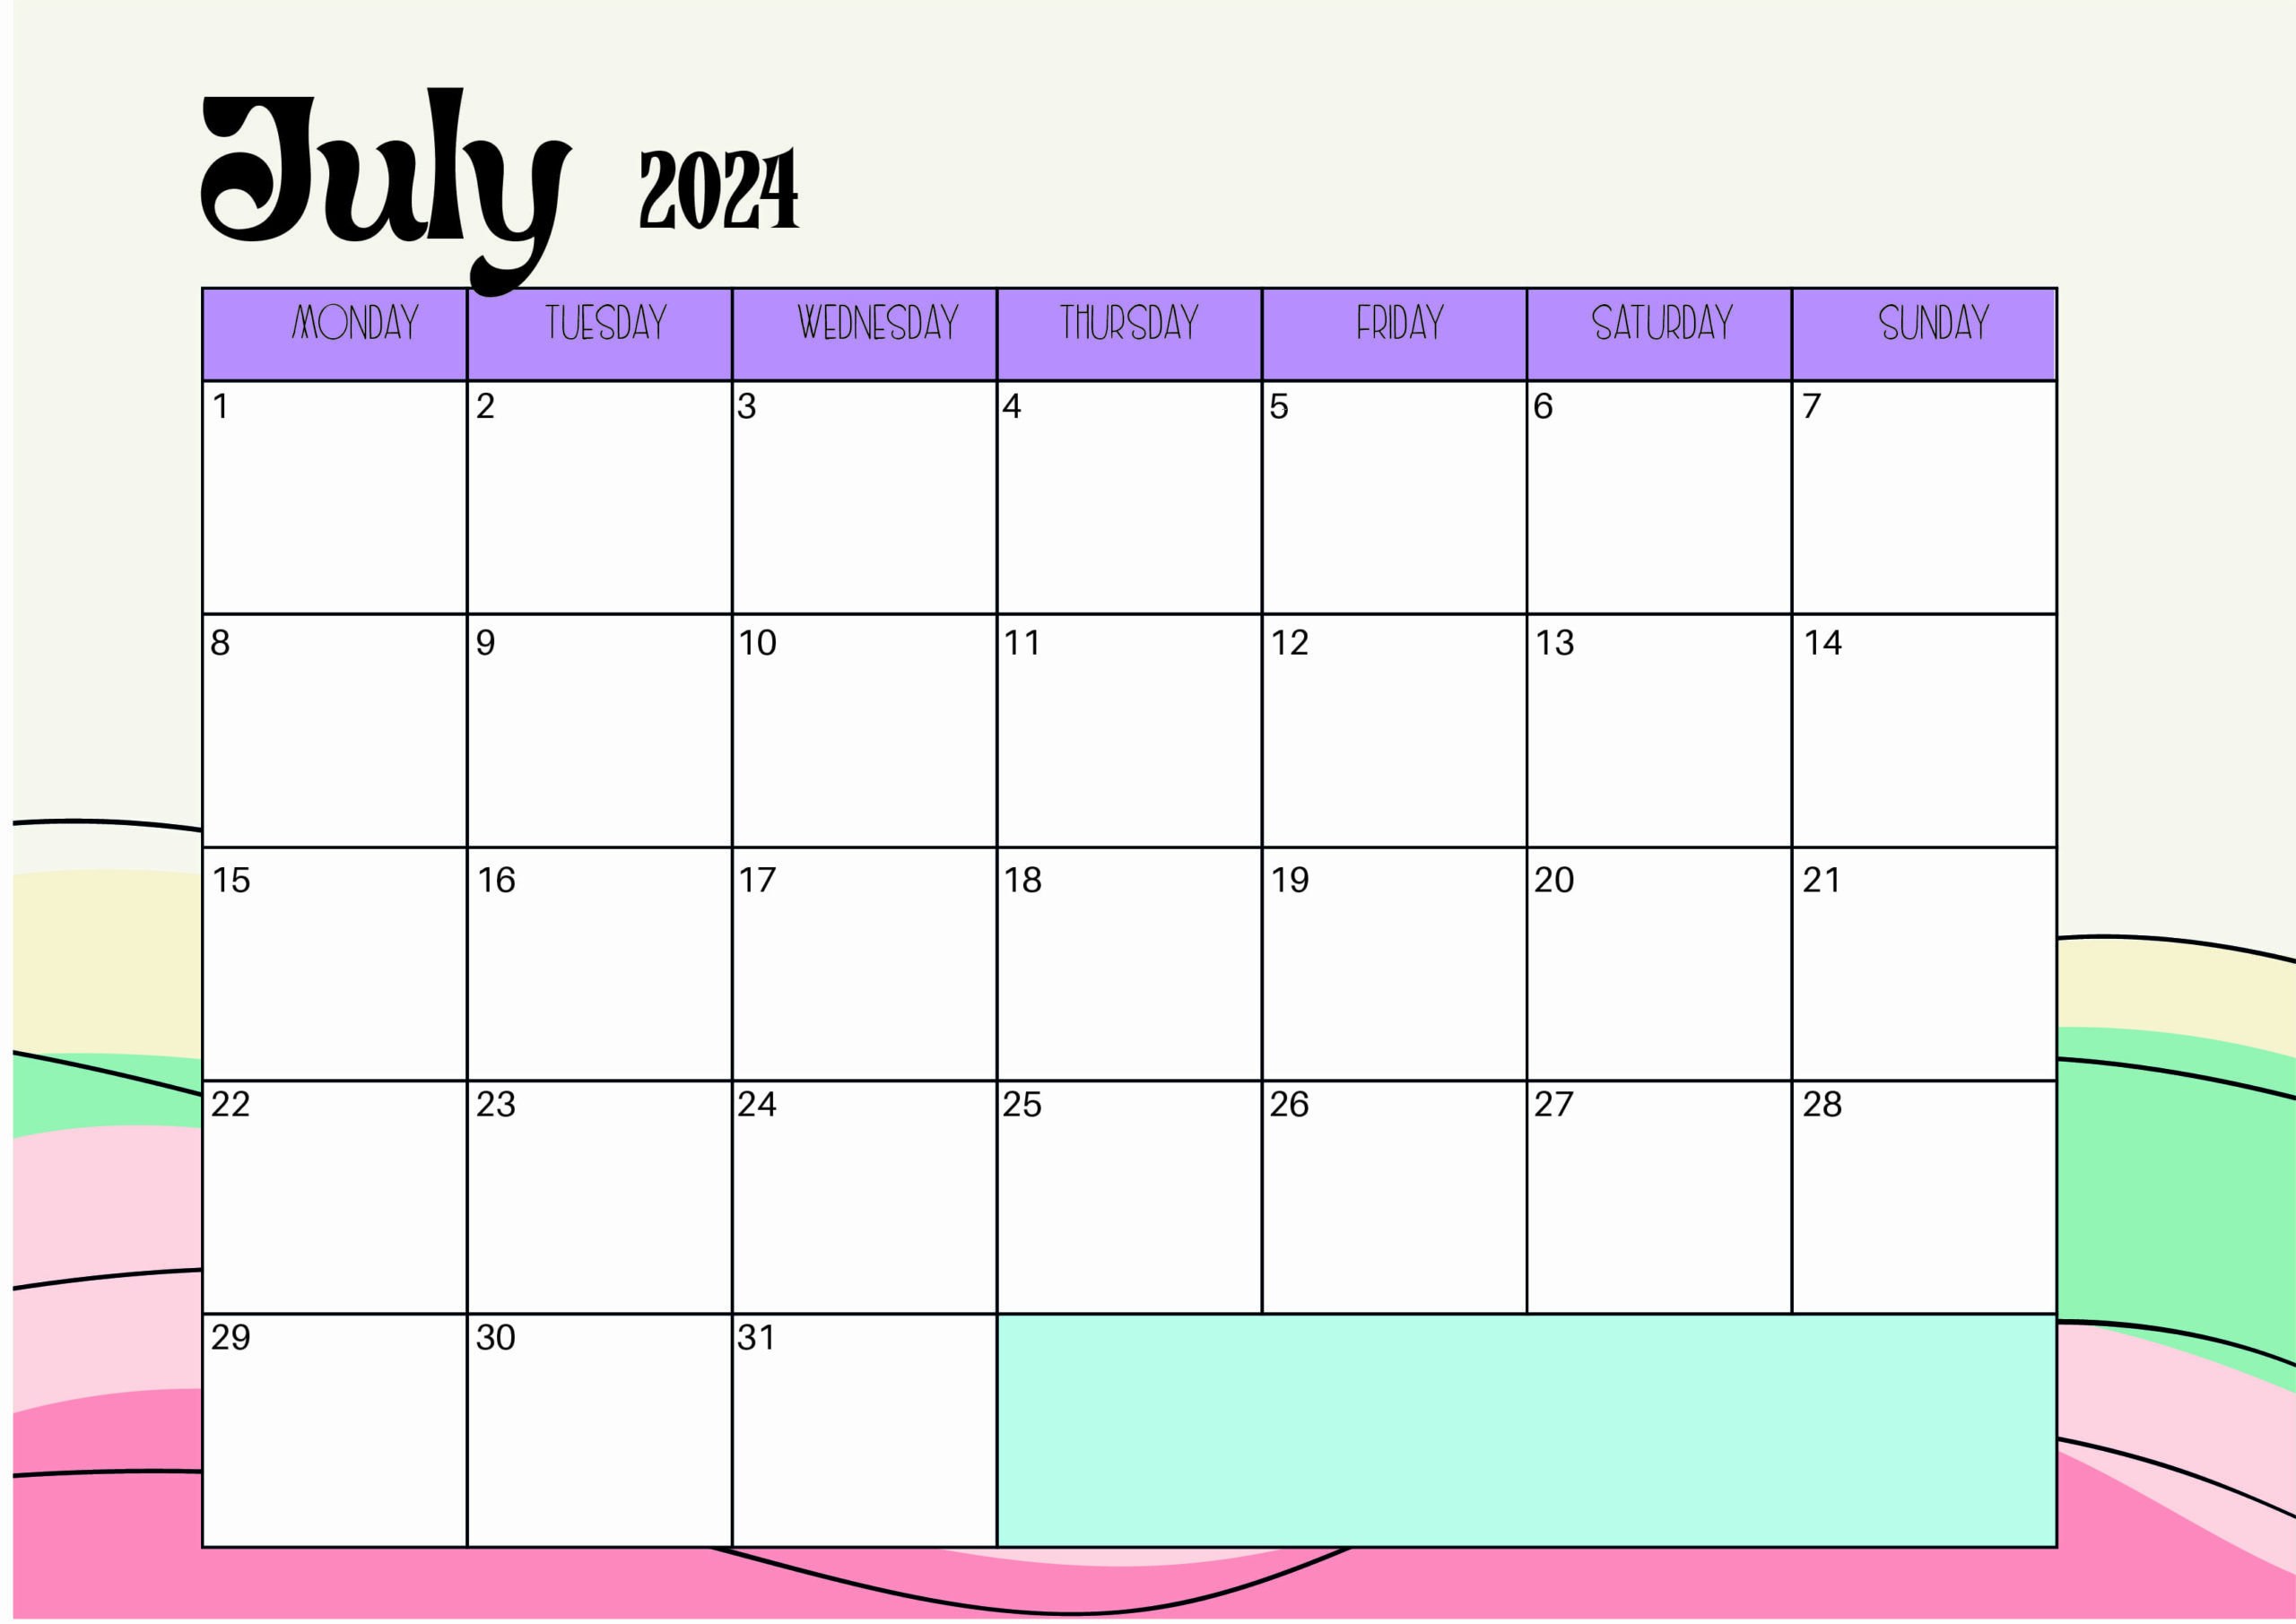 July 2024 Calendar for Printing